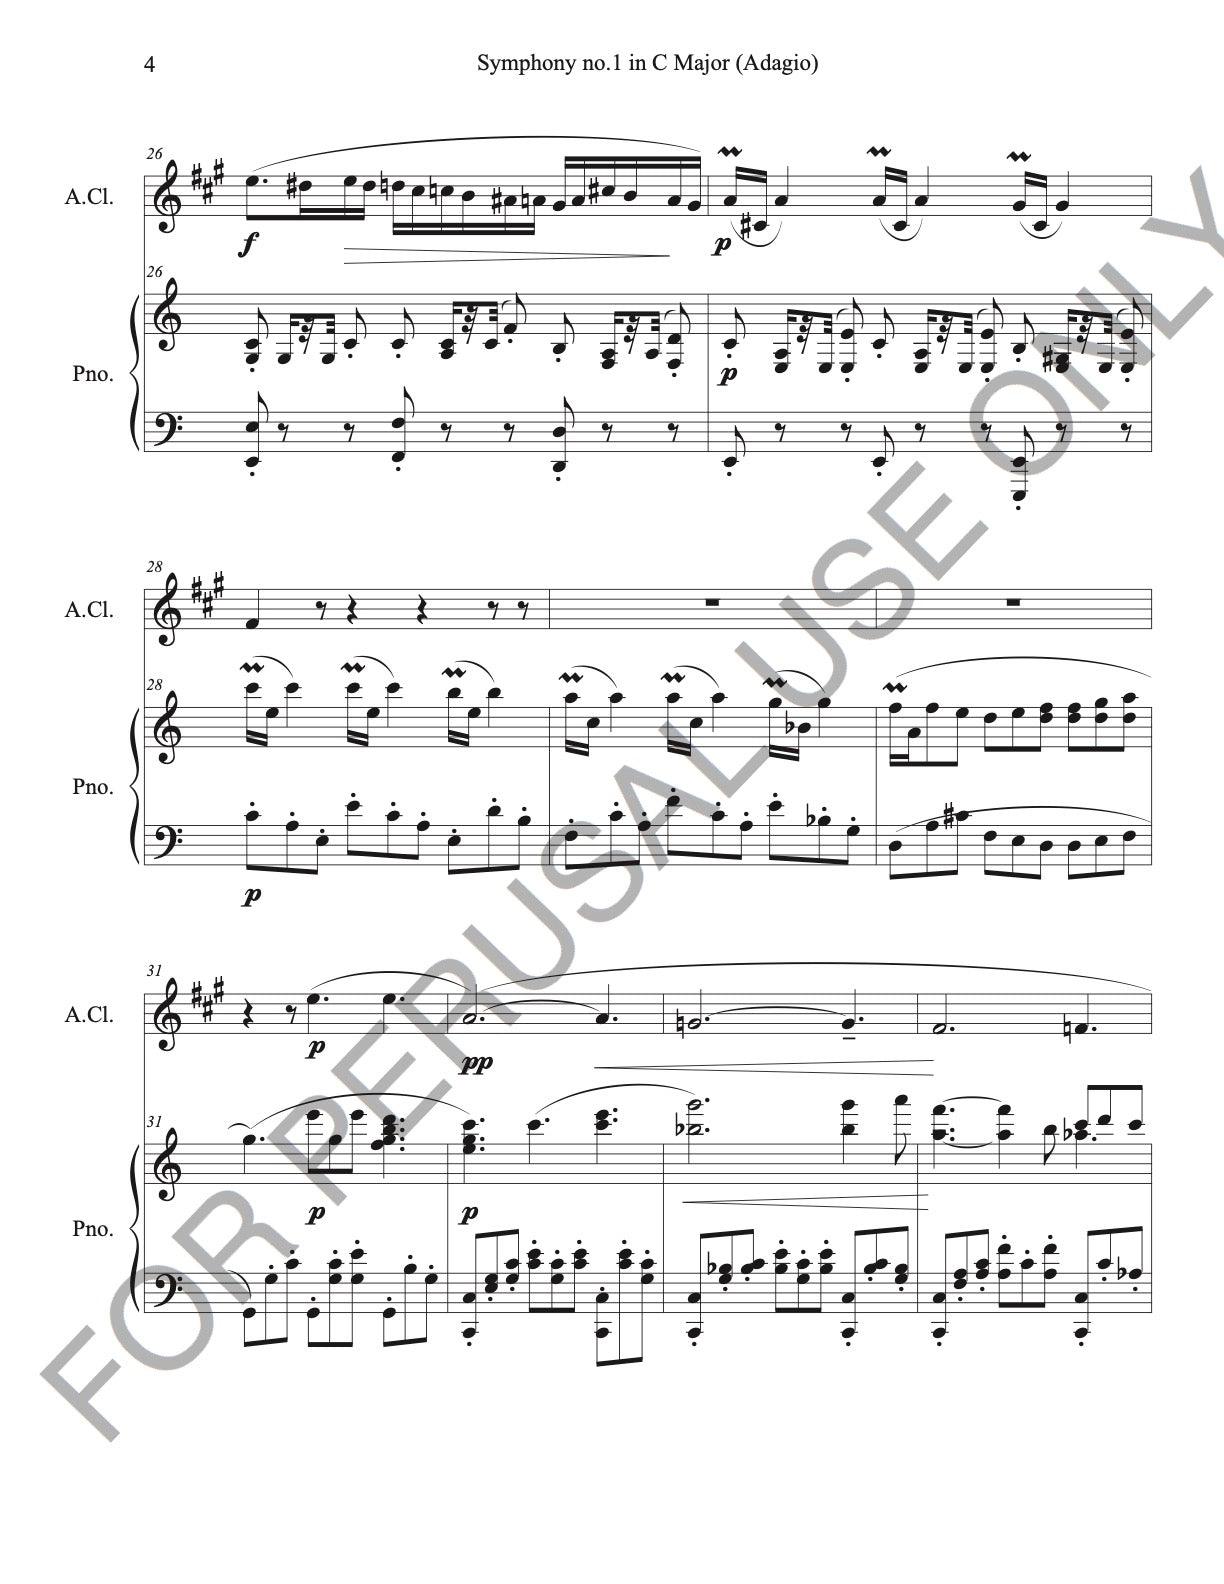 Alto Clarinet and Piano: Bizet's Symphony no.1 in C Major (II. Adagio) - ChaipruckMekara